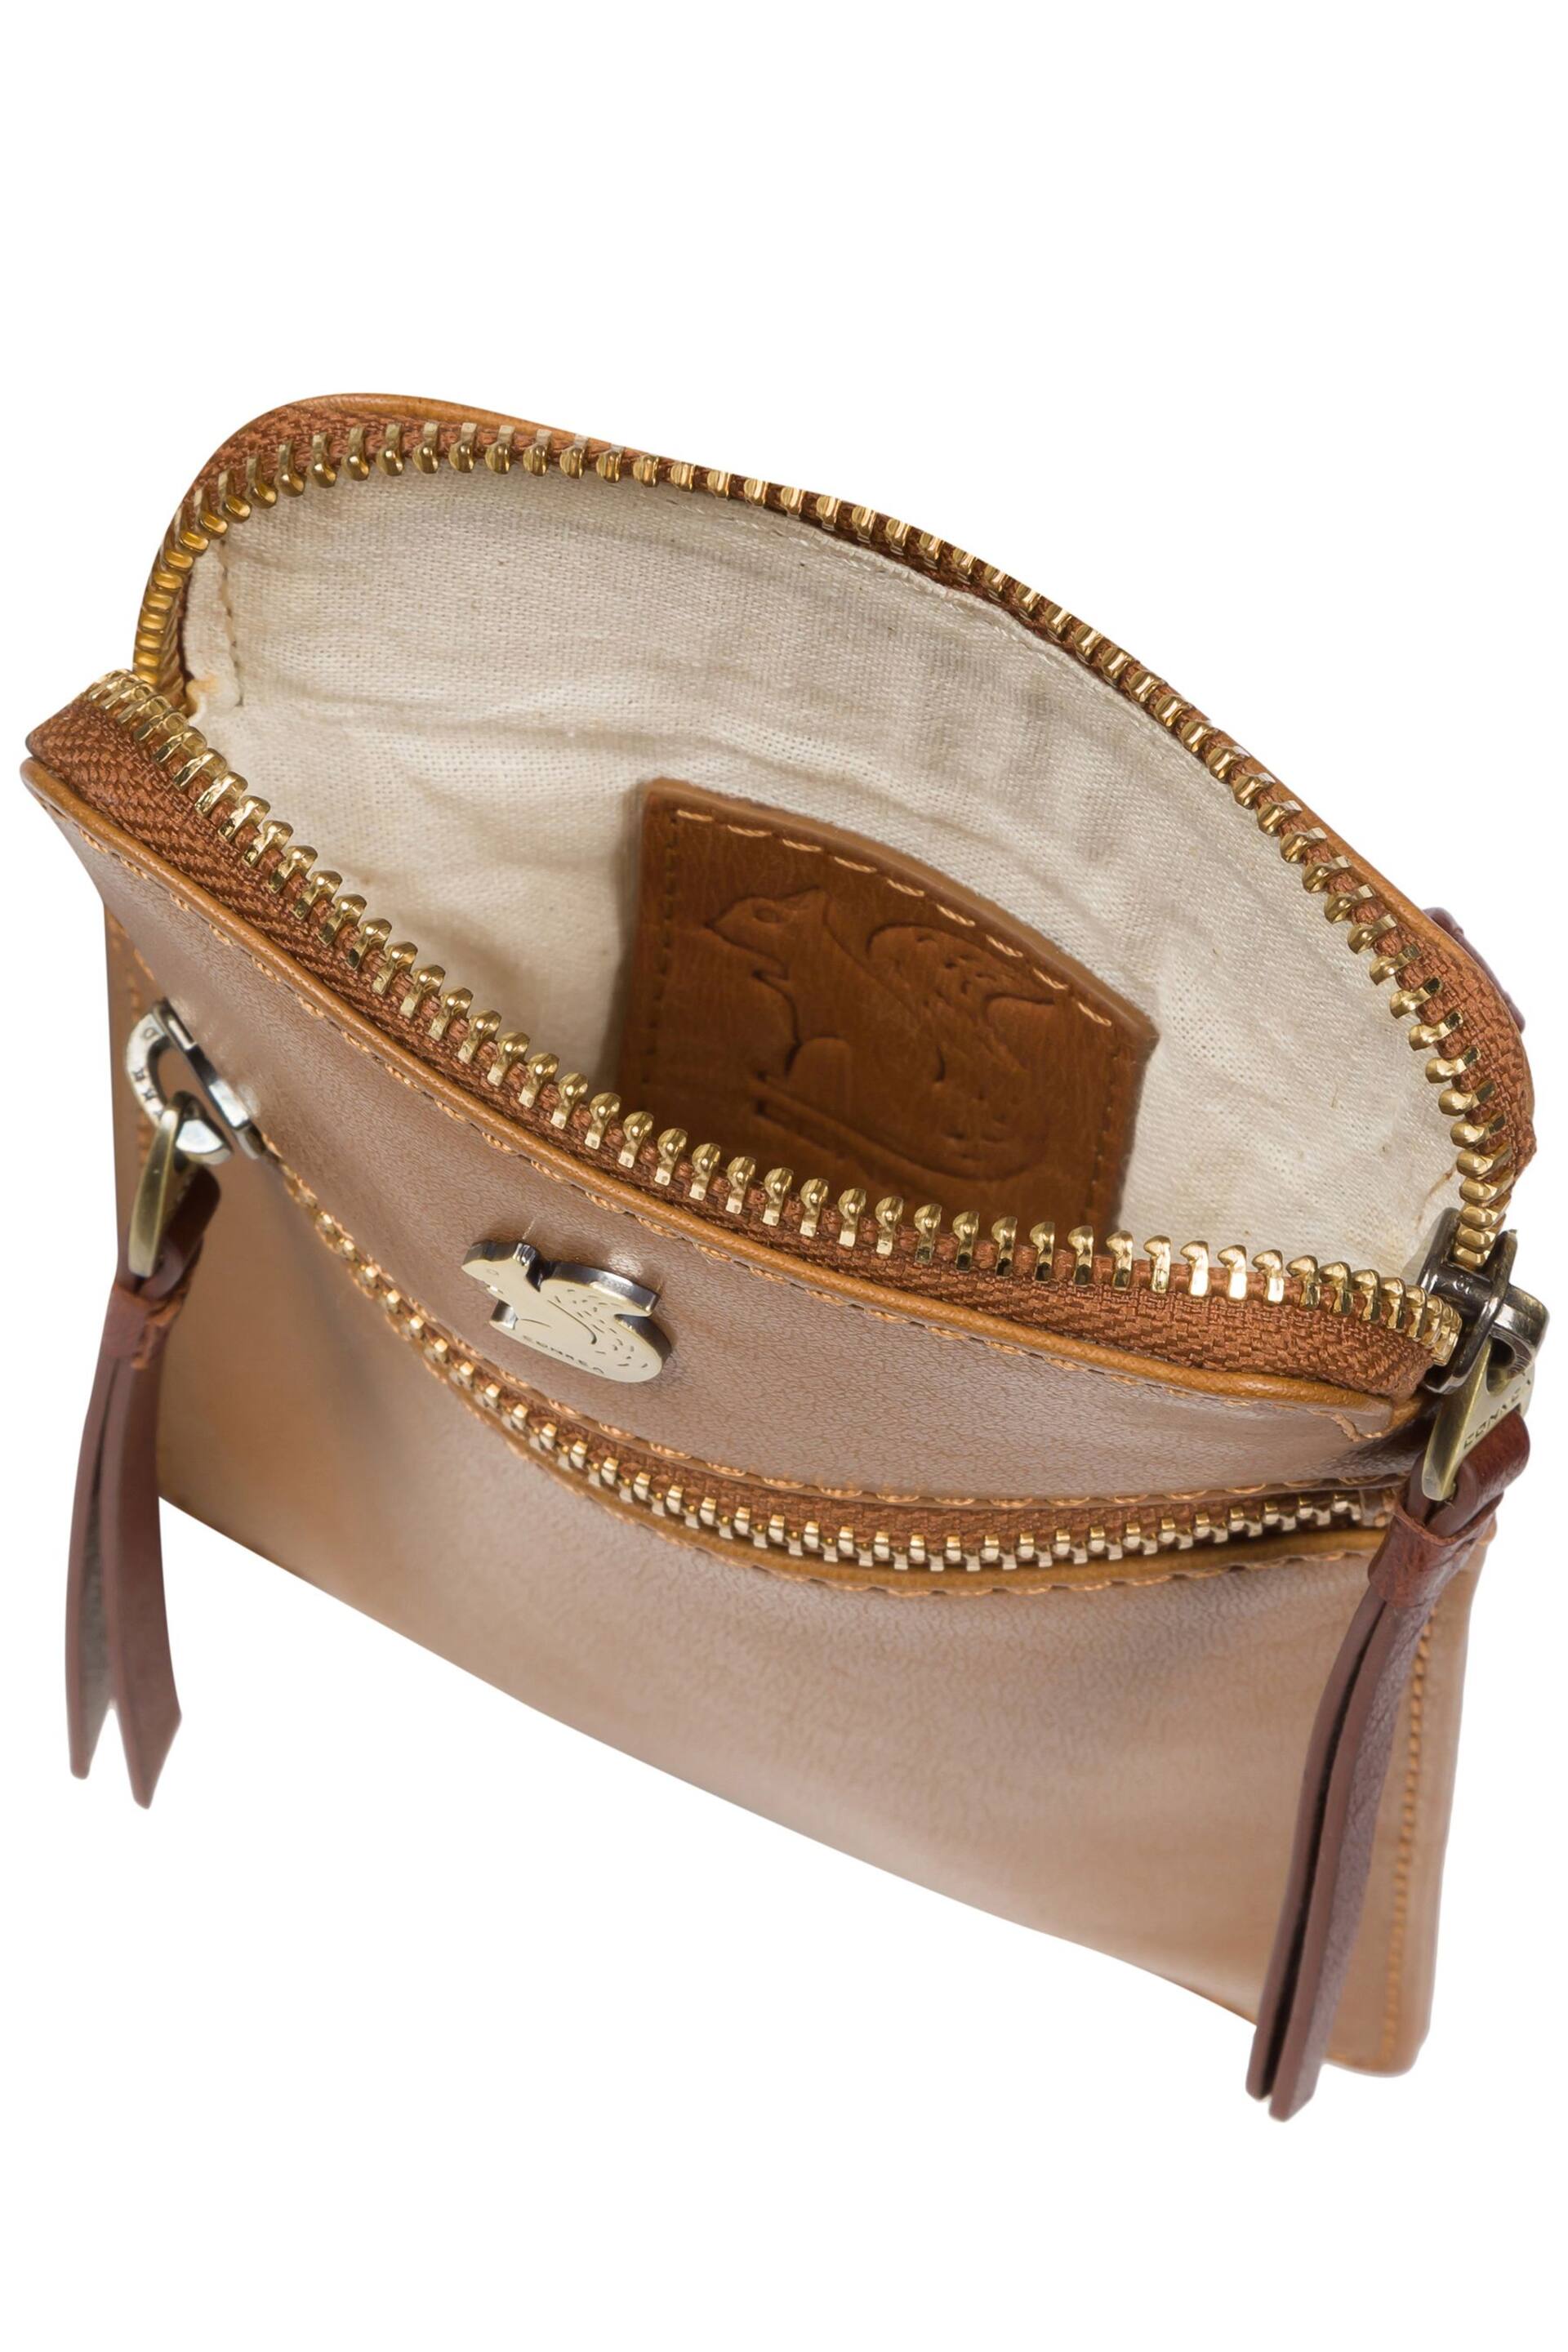 Conkca Bambino Leather Cross-Body Phone Bag - Image 4 of 4